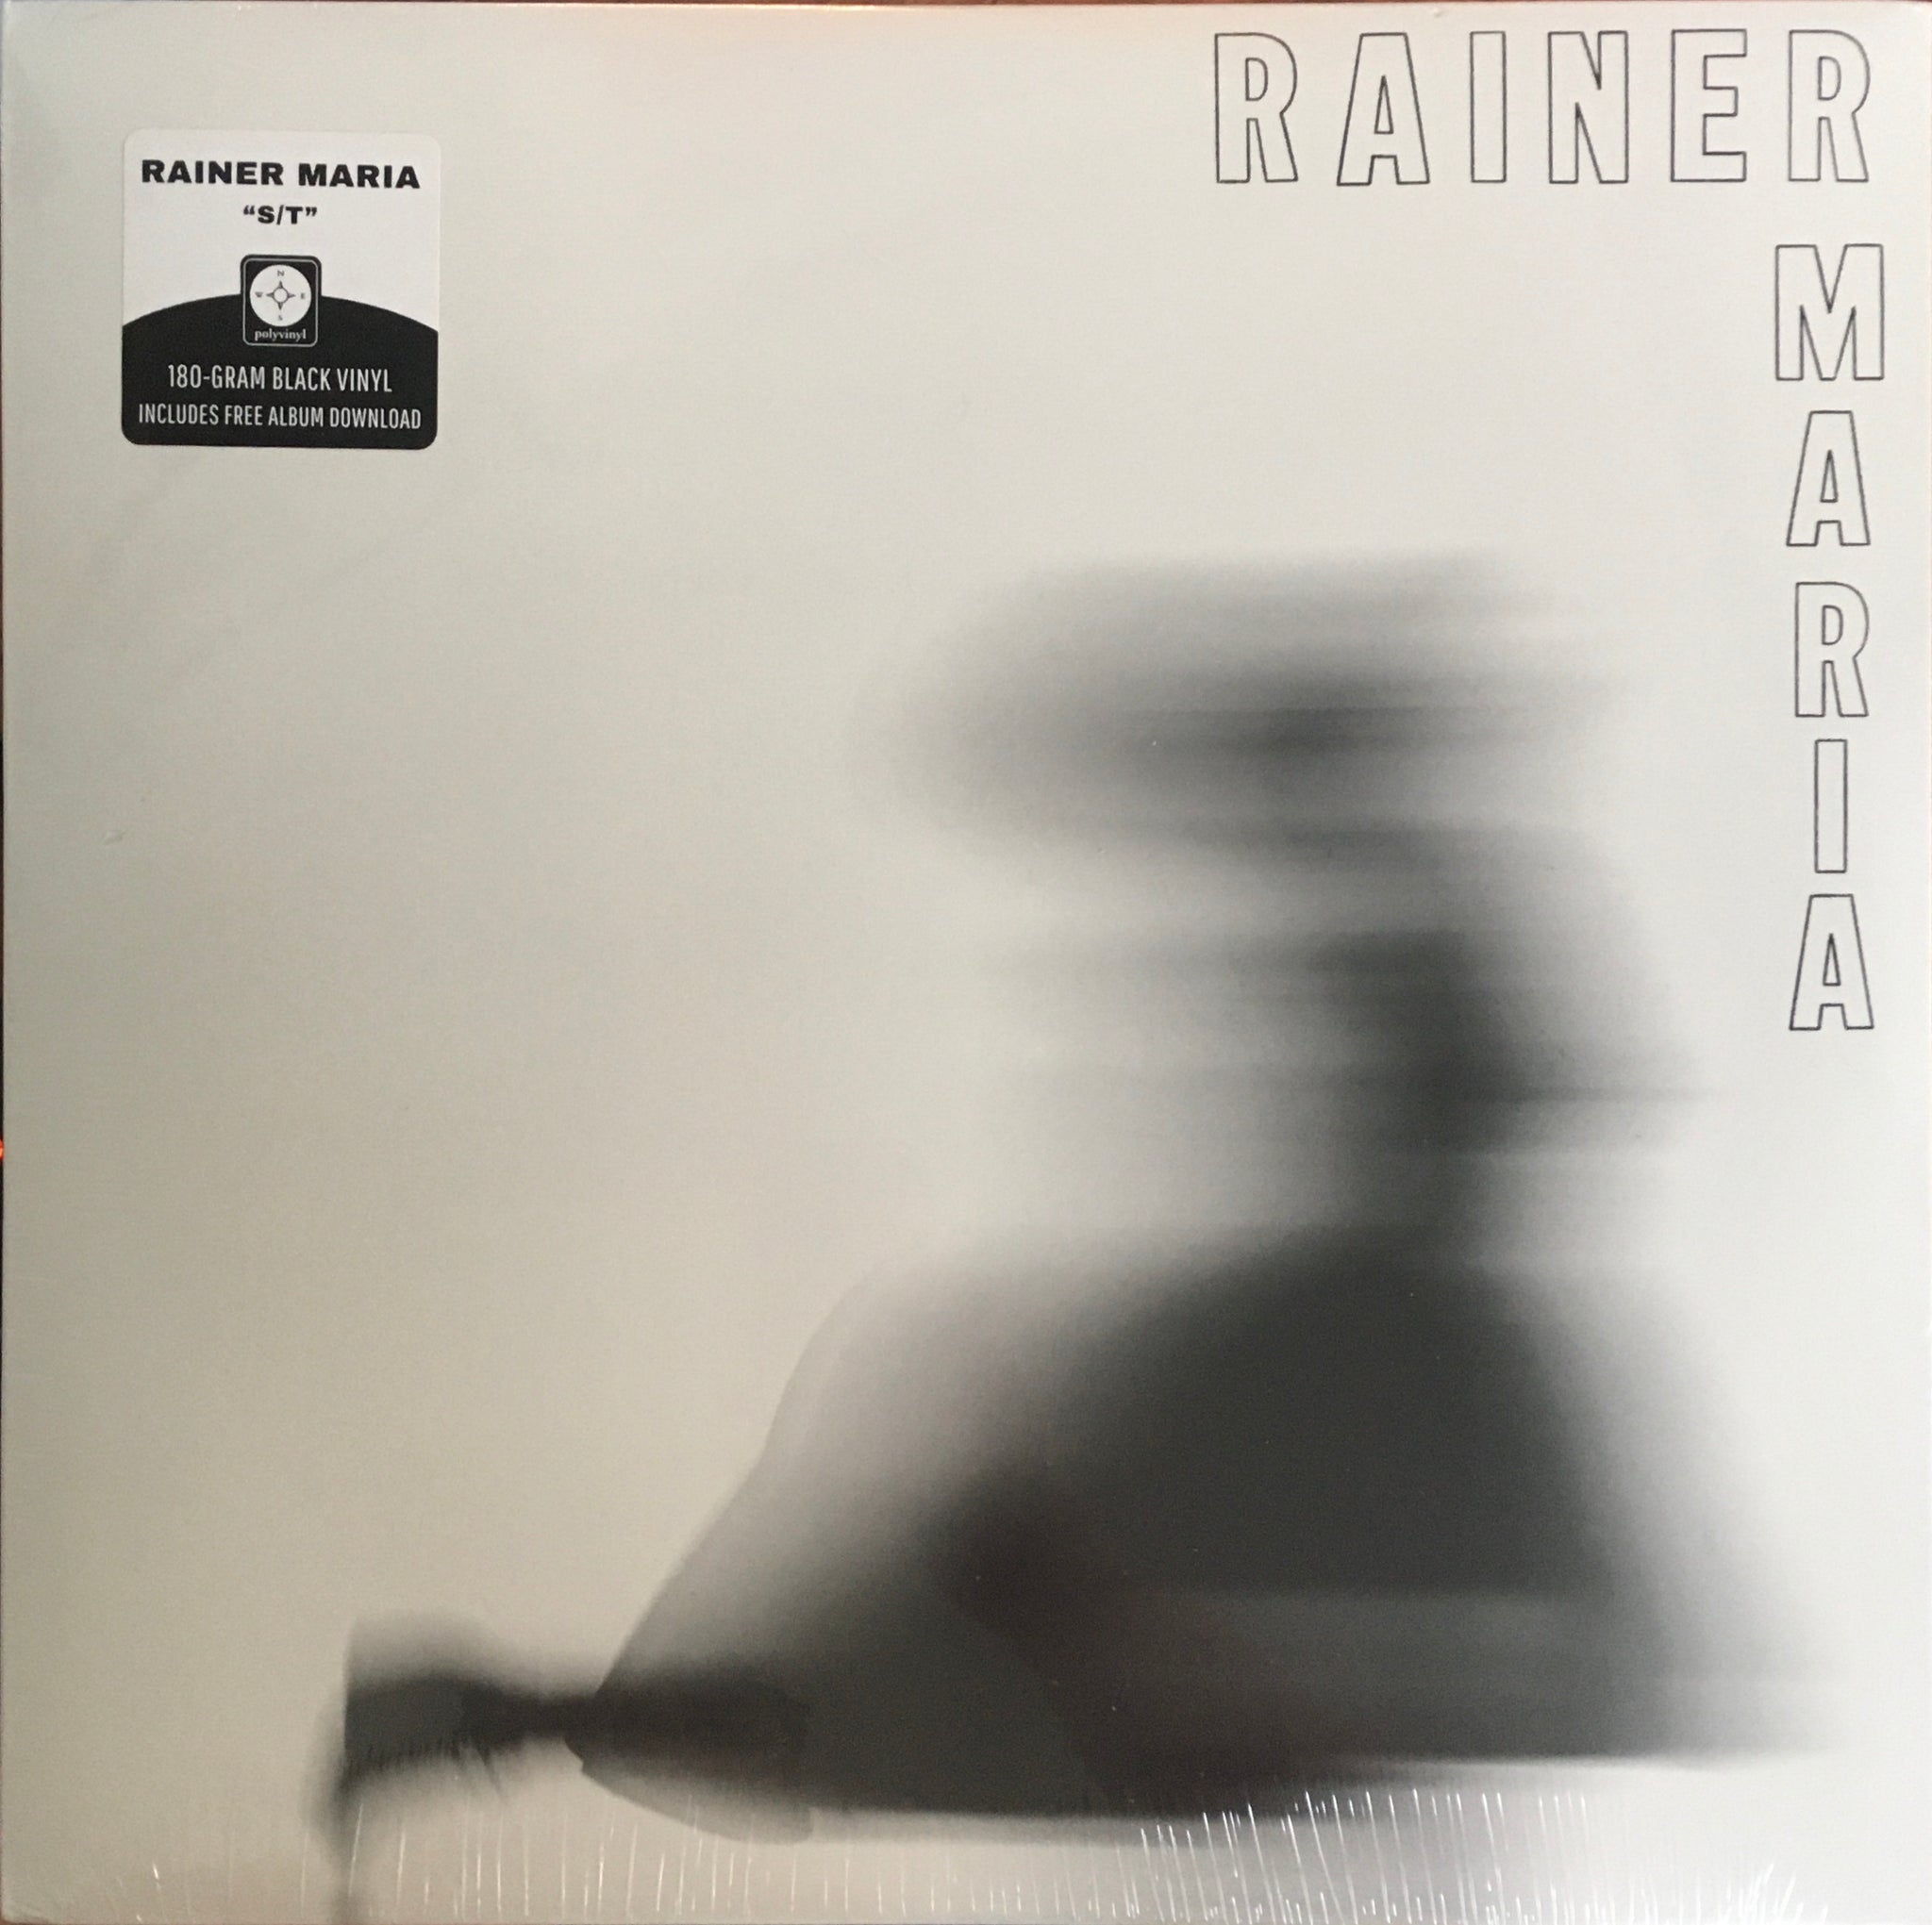 Rainer Maria "Self-titled" LP (2017)